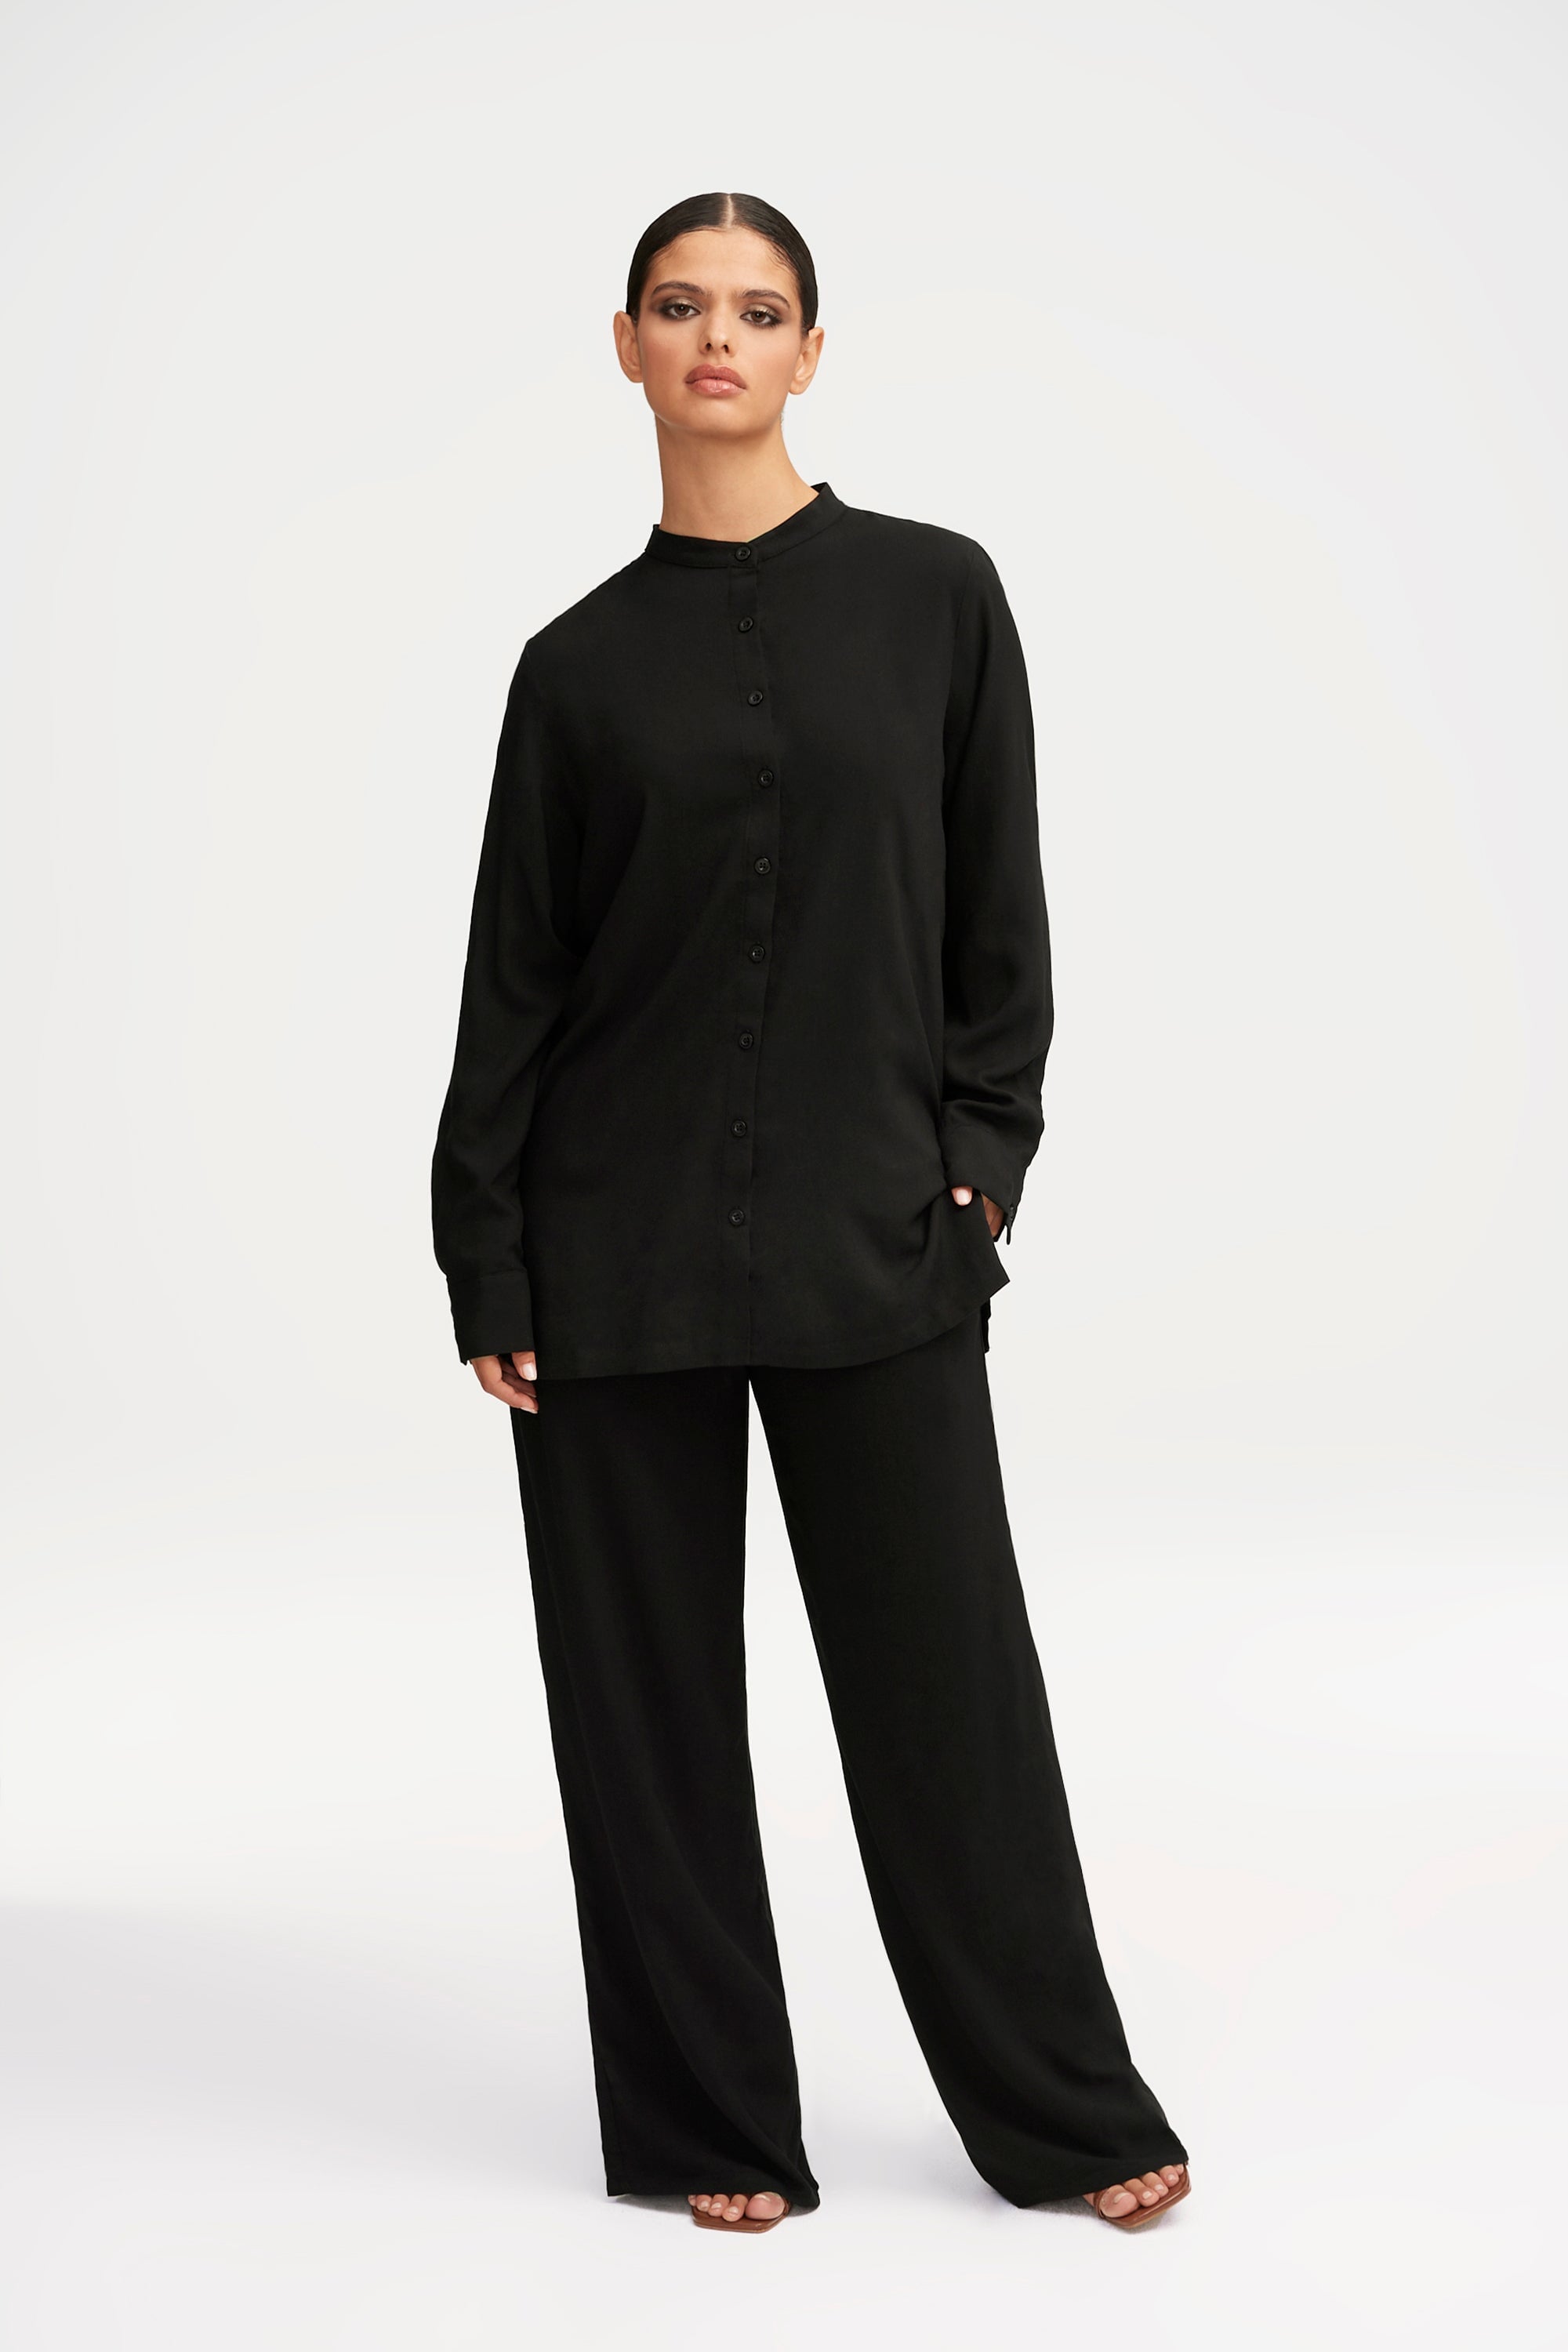 Alina Button Down Side Slit Top - Black Clothing saigonodysseyhotel 